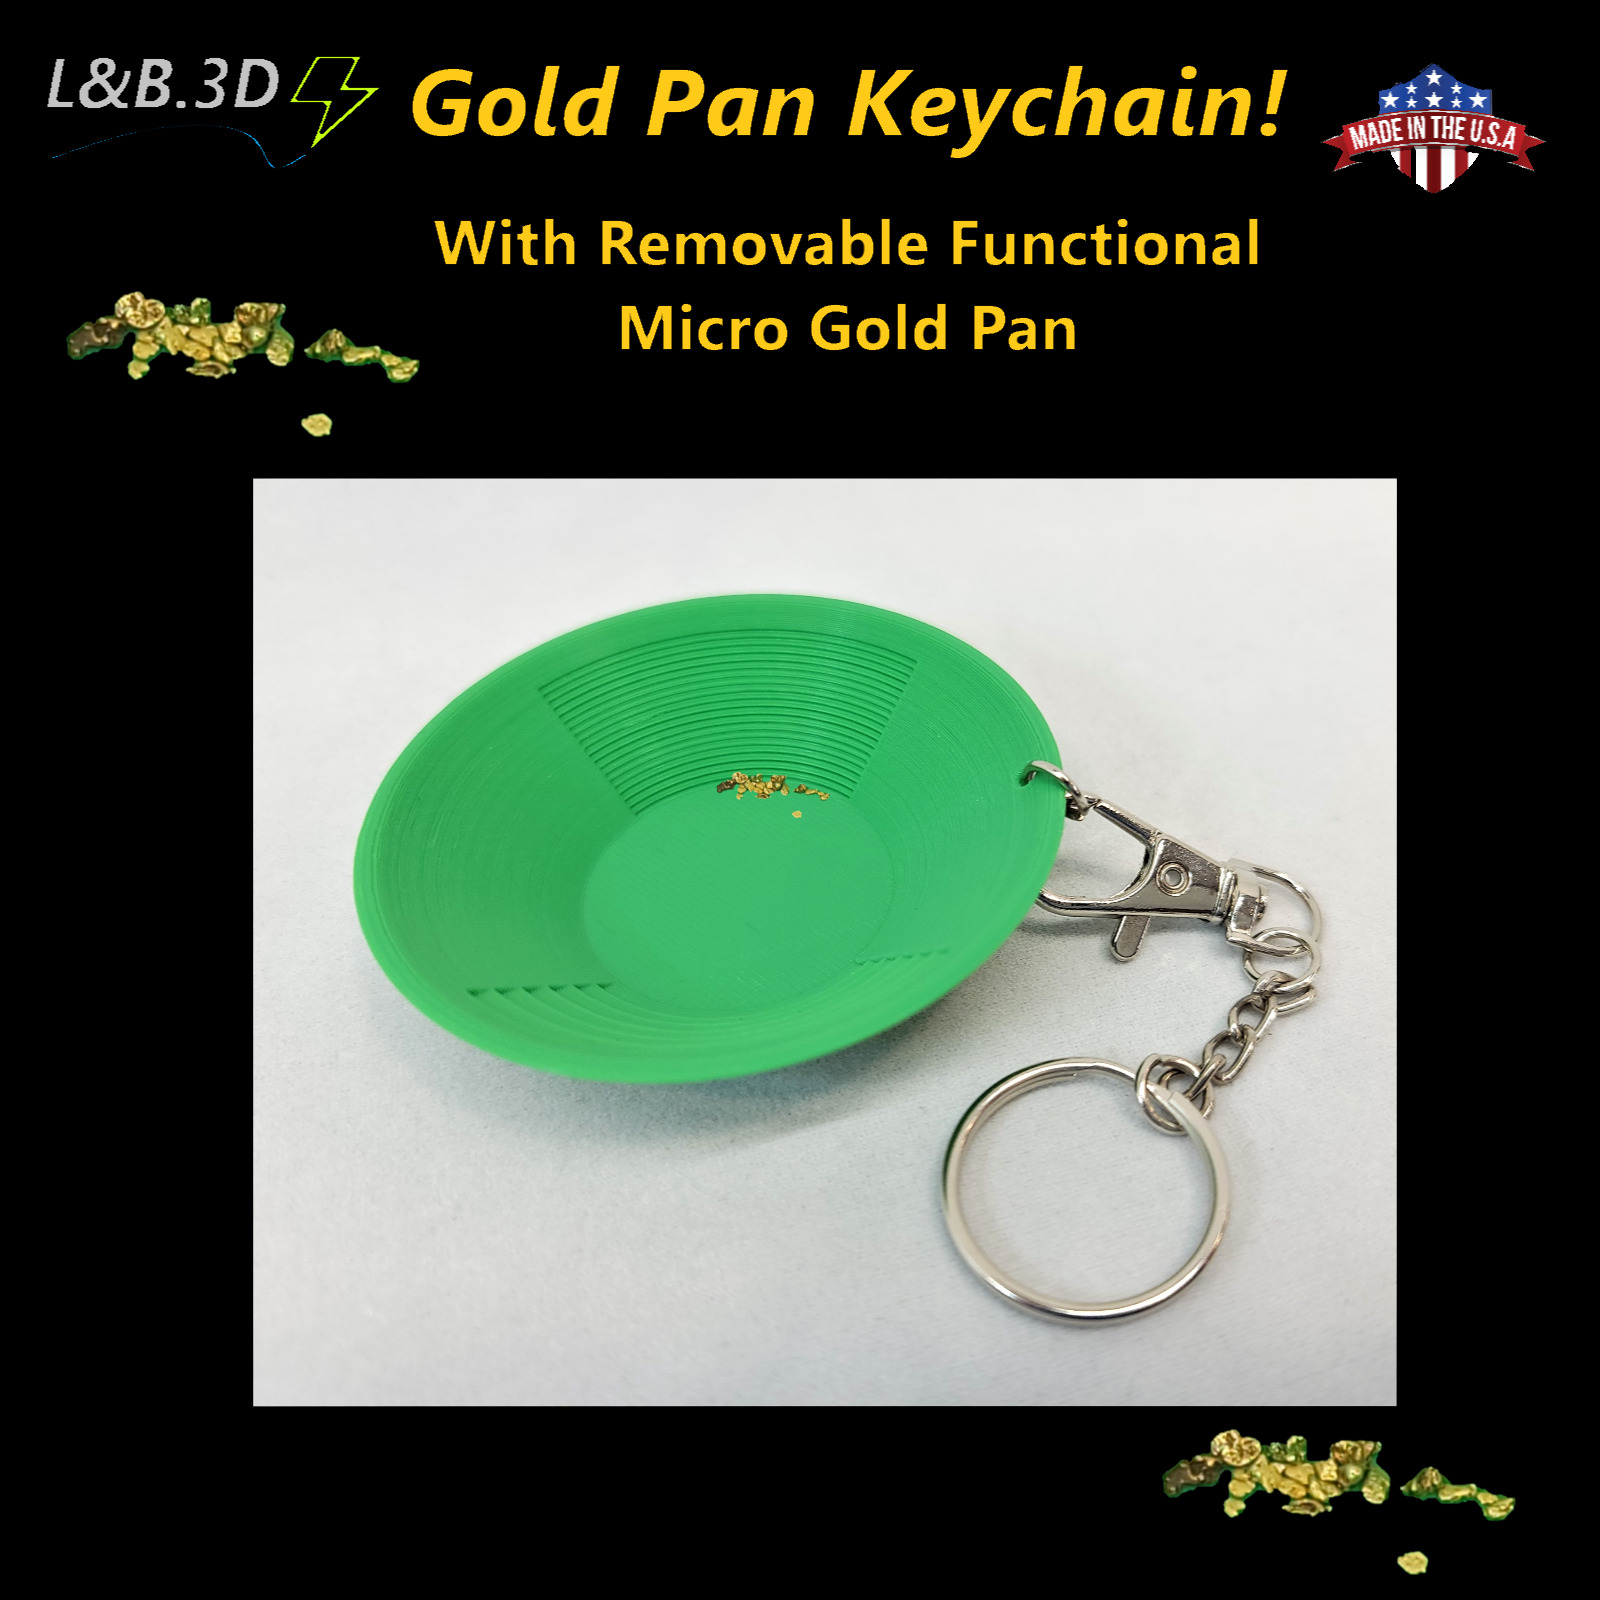 Micro Gold Pan Keychain